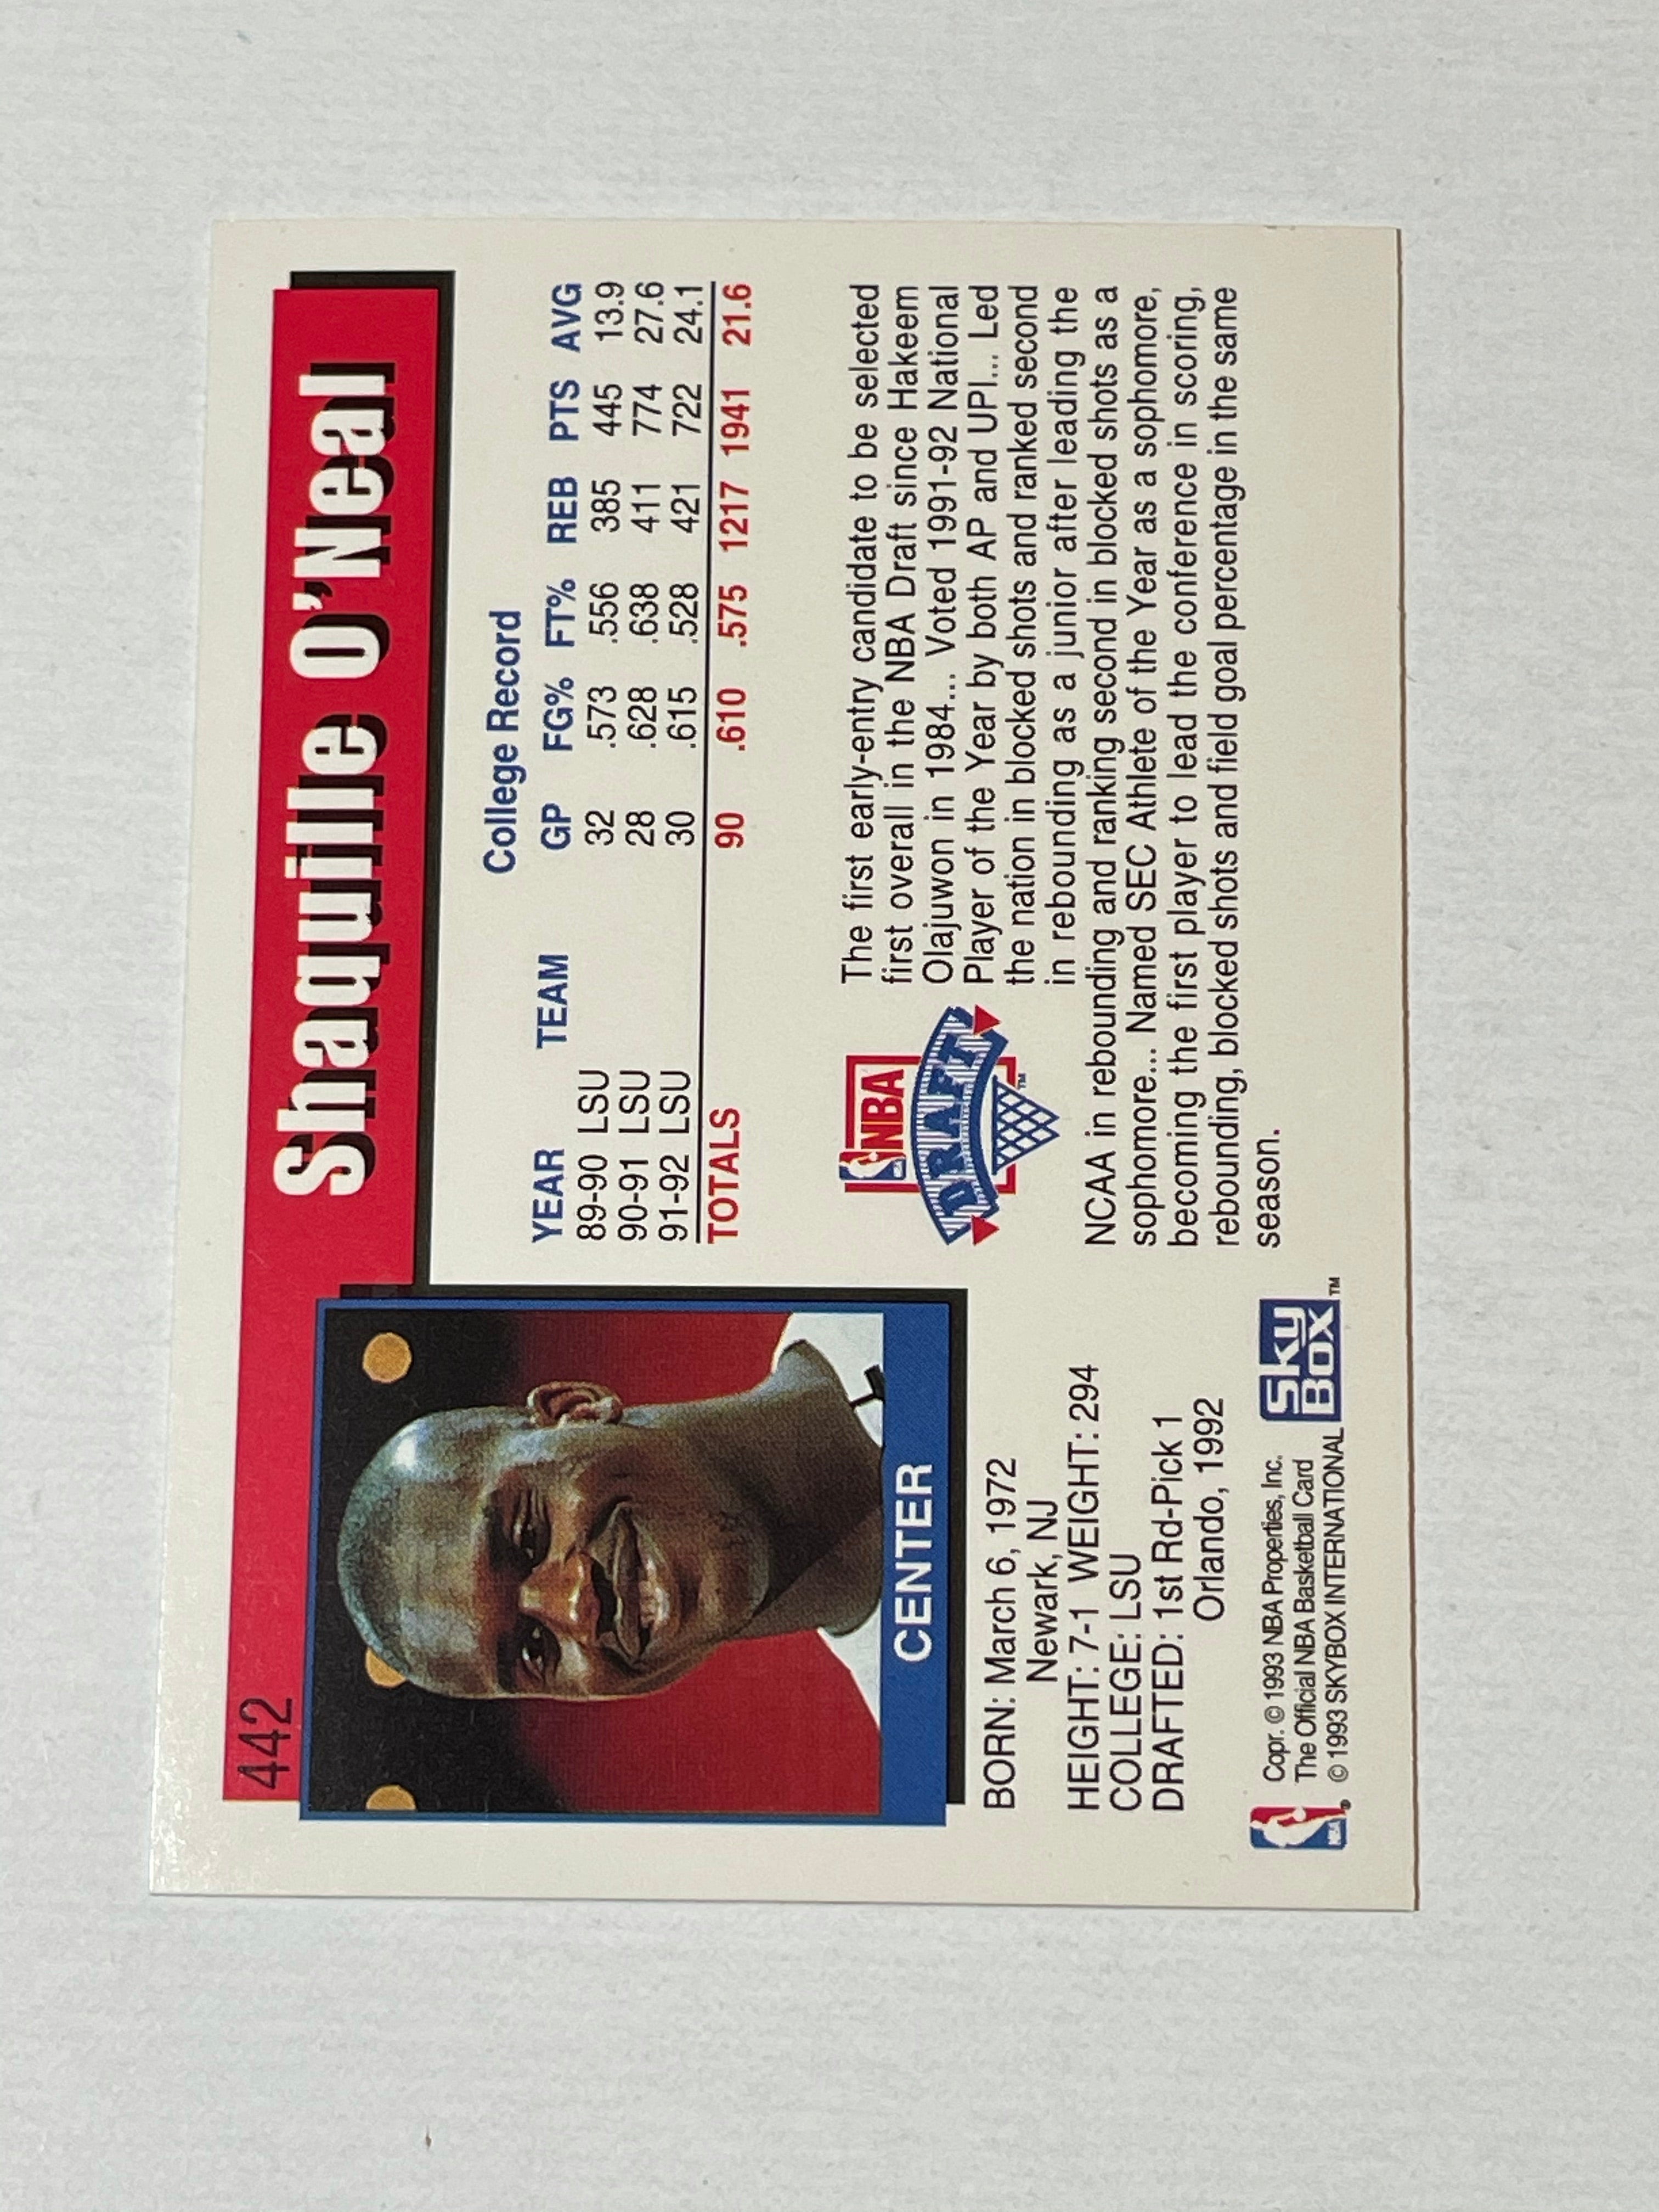 Shaq O’Neal Hoops basketball rookie card 1992